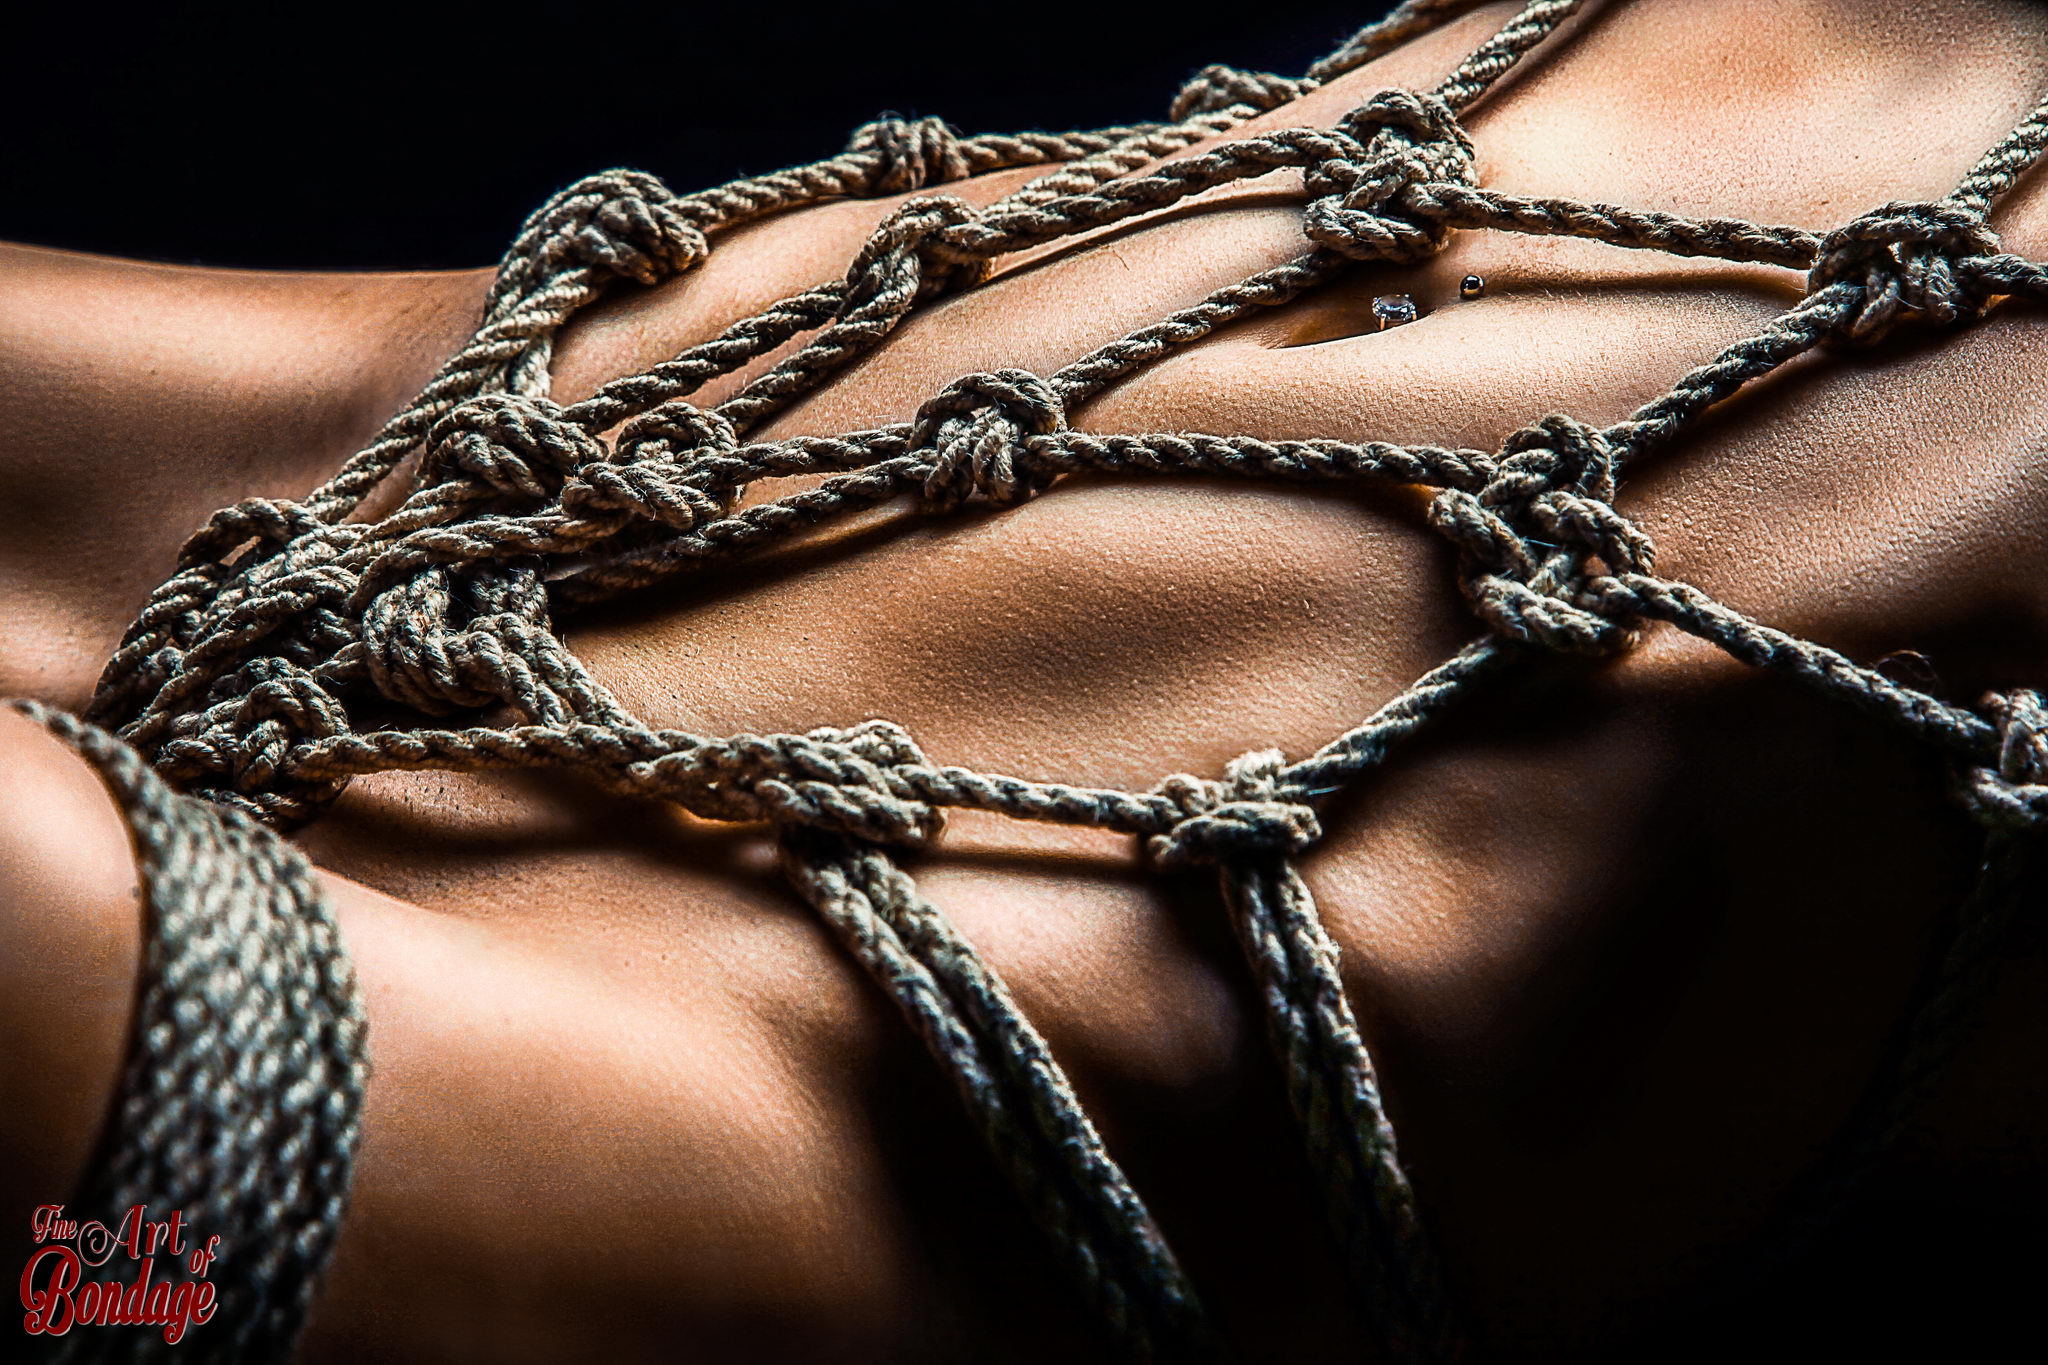 Rope and chain bondage